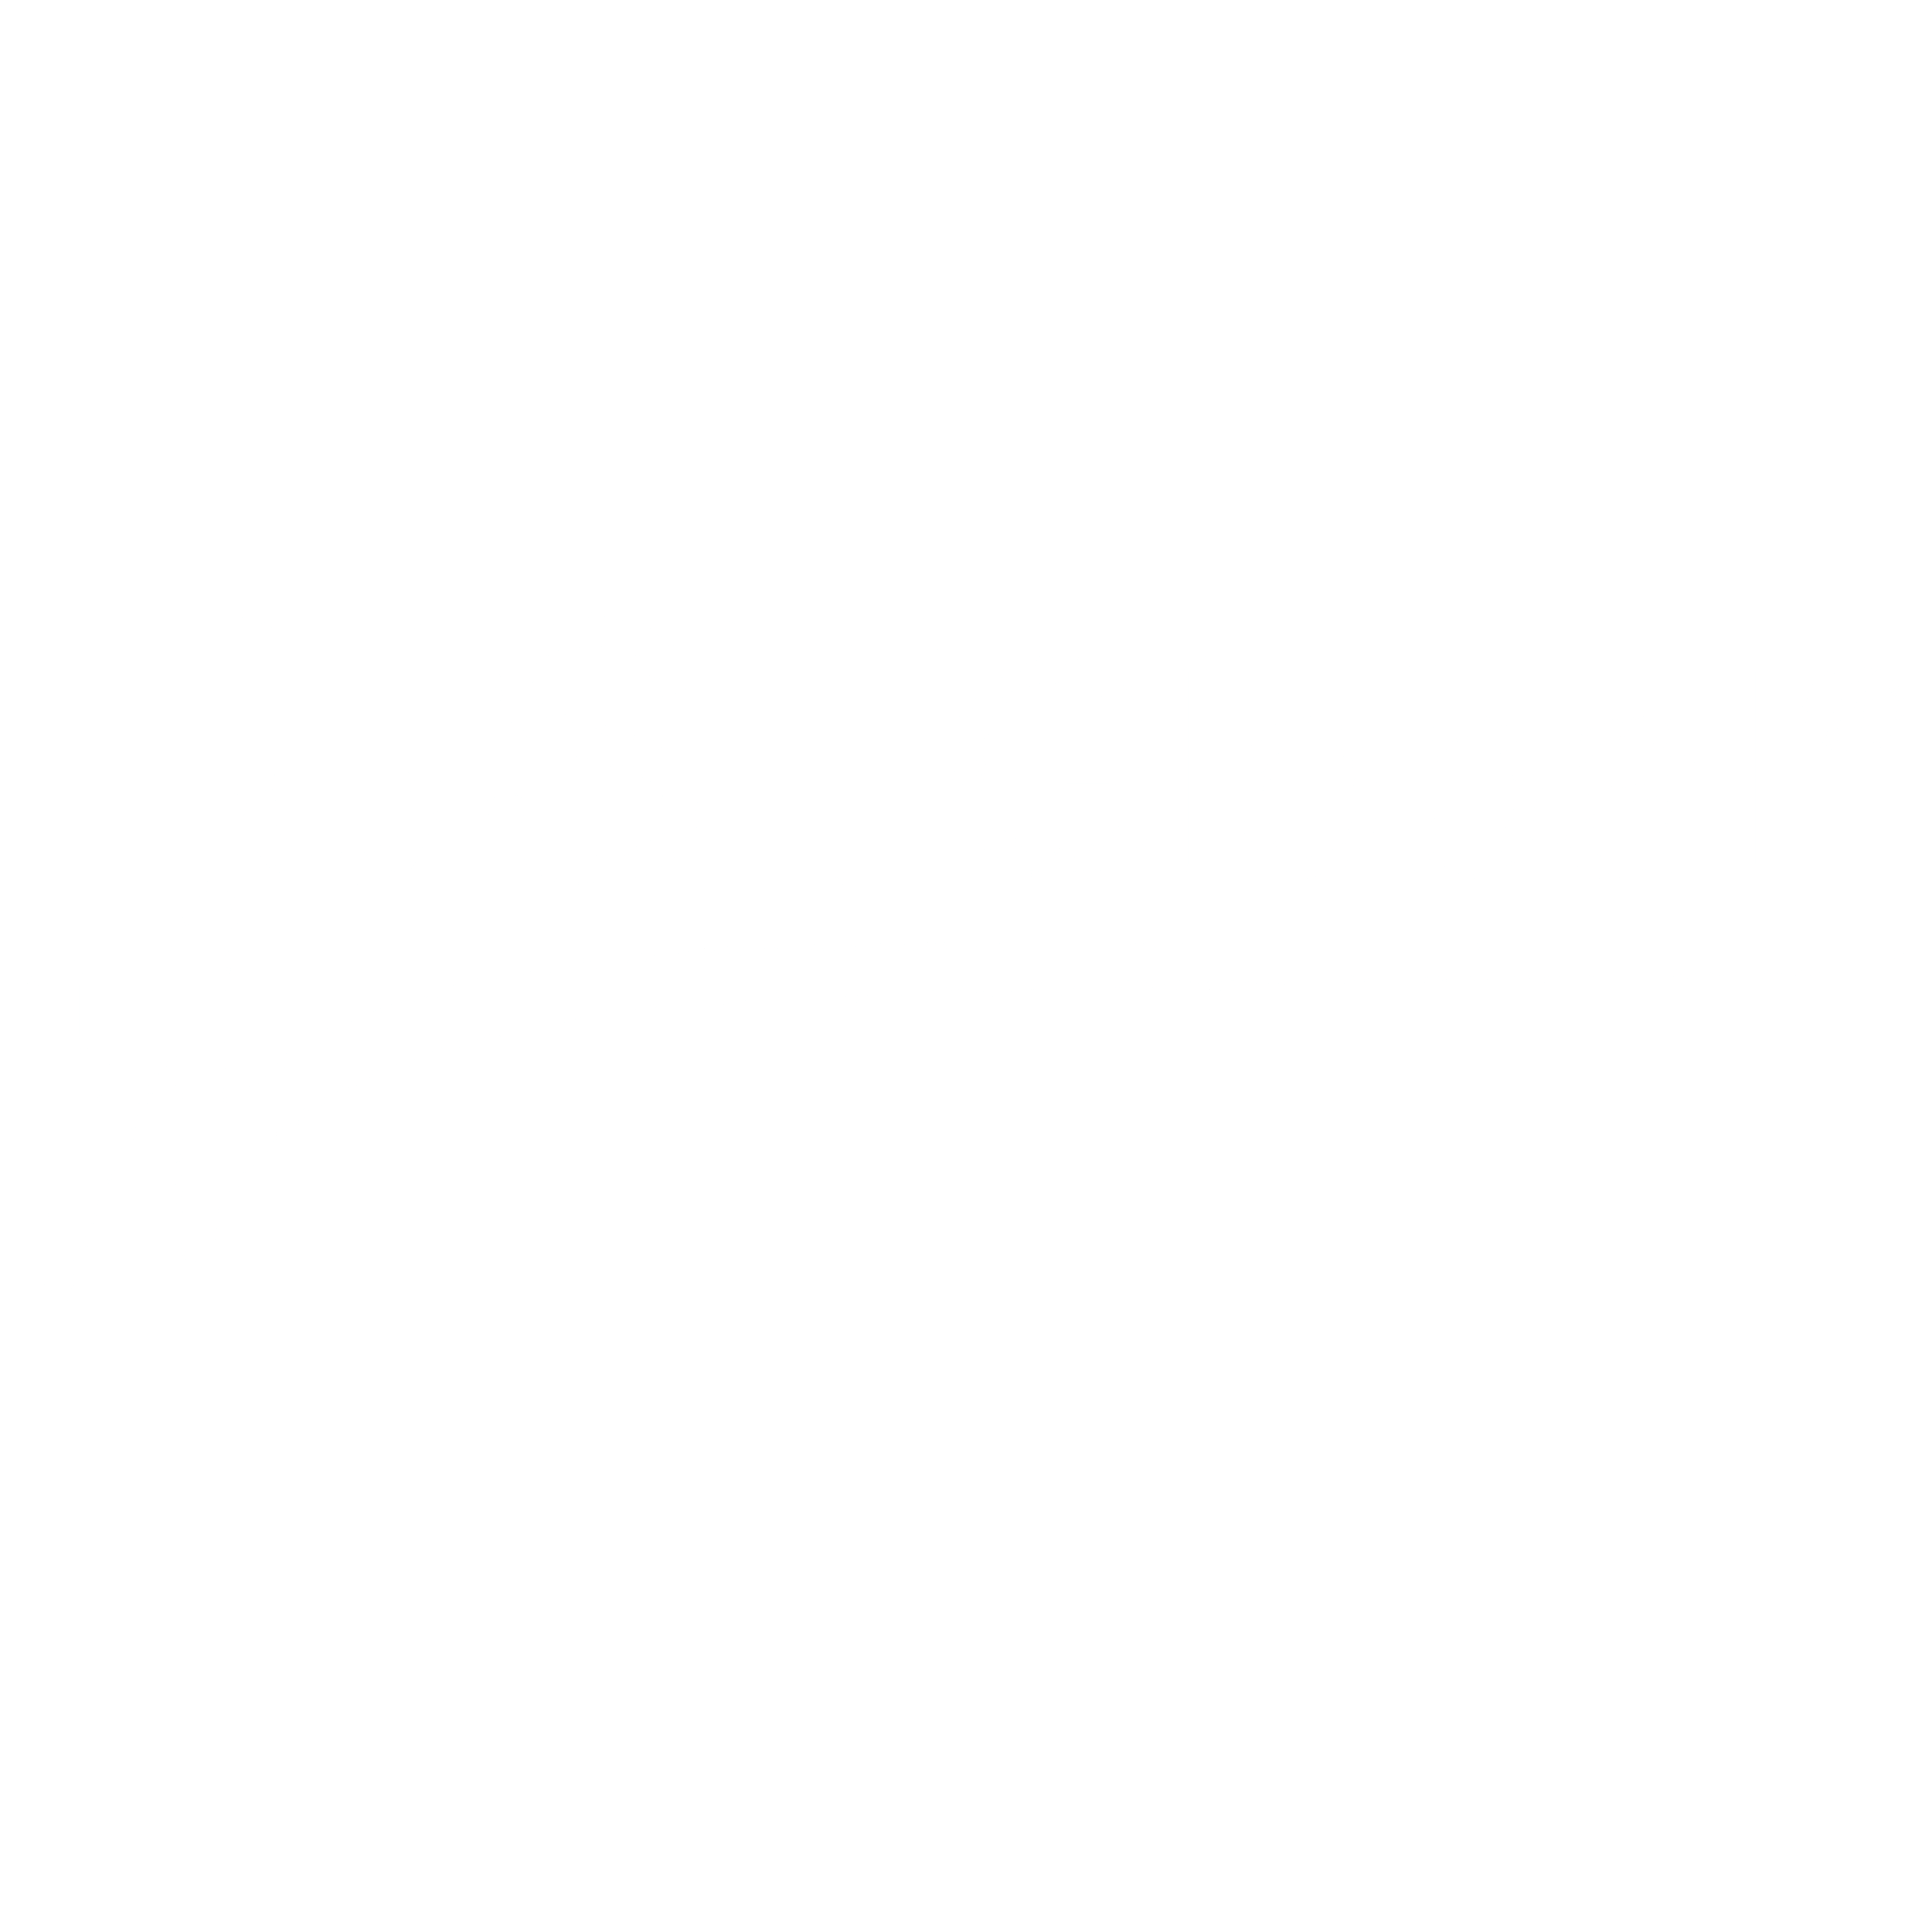 UST Global Logo